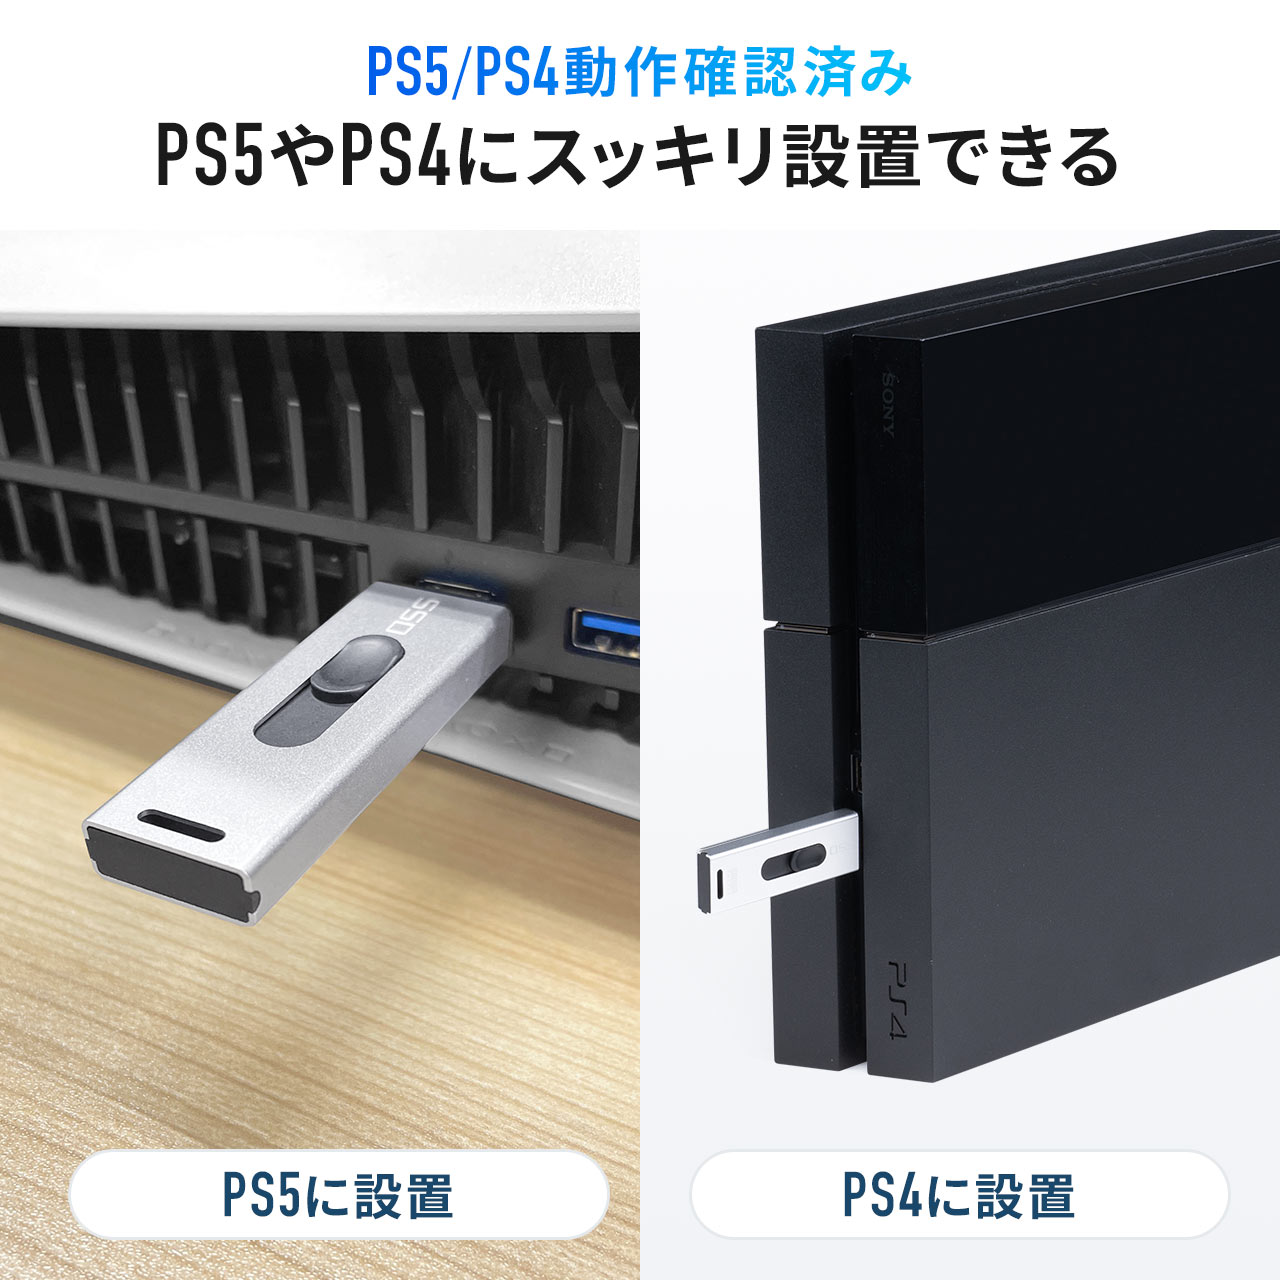 yZ[zXeBbN^SSD Ot USB3.2 Gen2 ^ 2TB er^ Q[@ PS5/PS4/Xbox Series X XCh } Vo[ 600-USSD2TBS